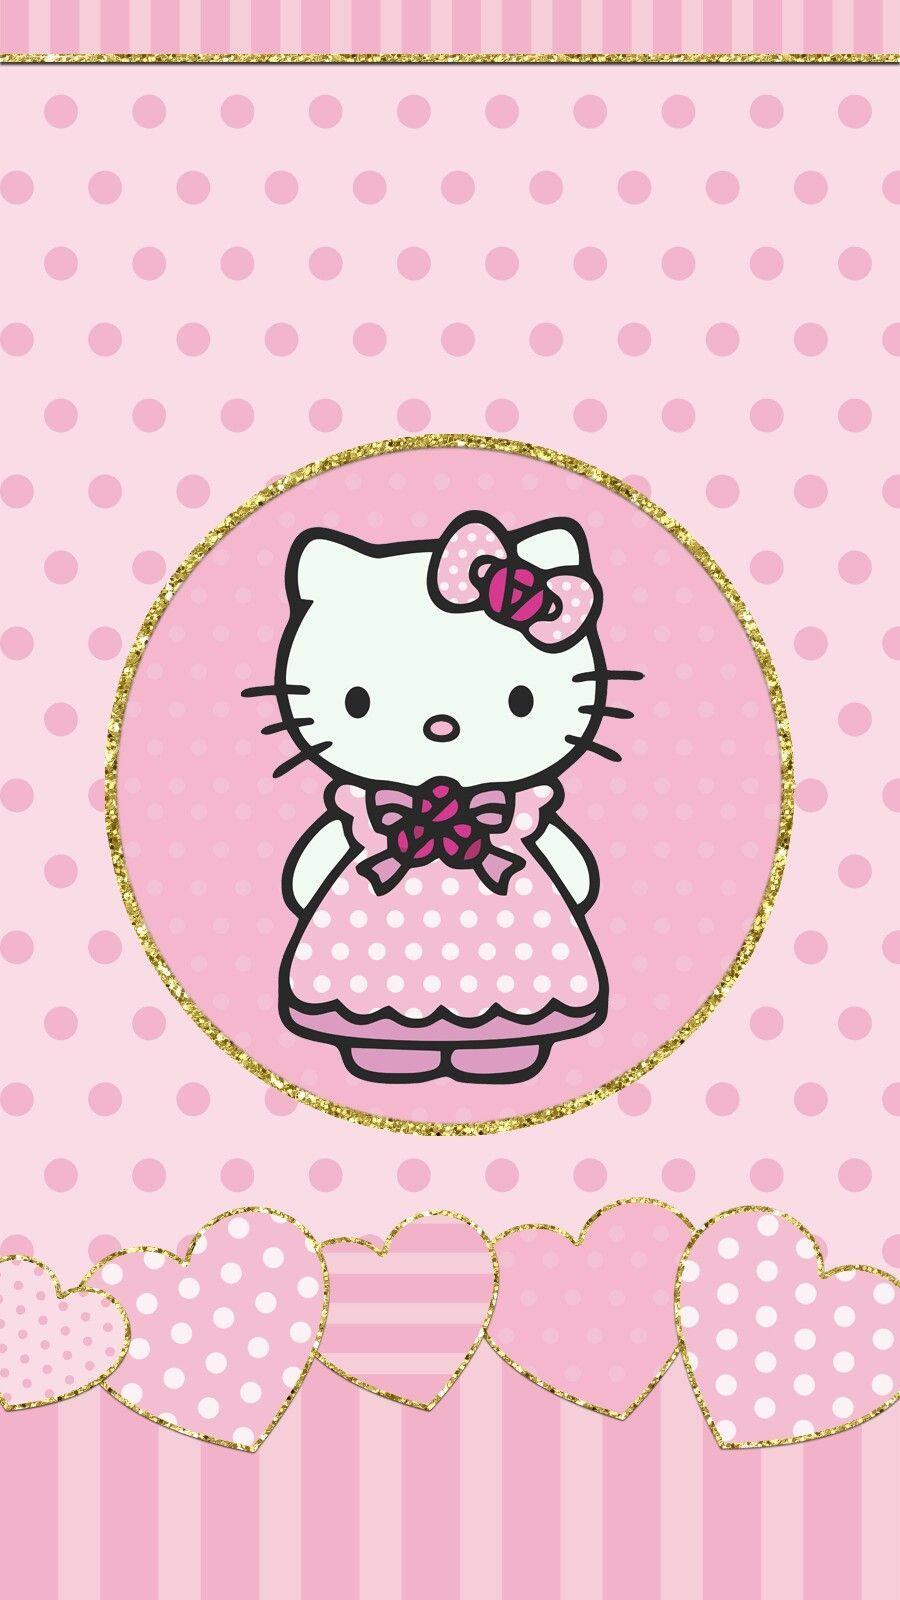 Wallpaper ID 416890  Anime Hello Kitty Phone Wallpaper  1080x1920 free  download